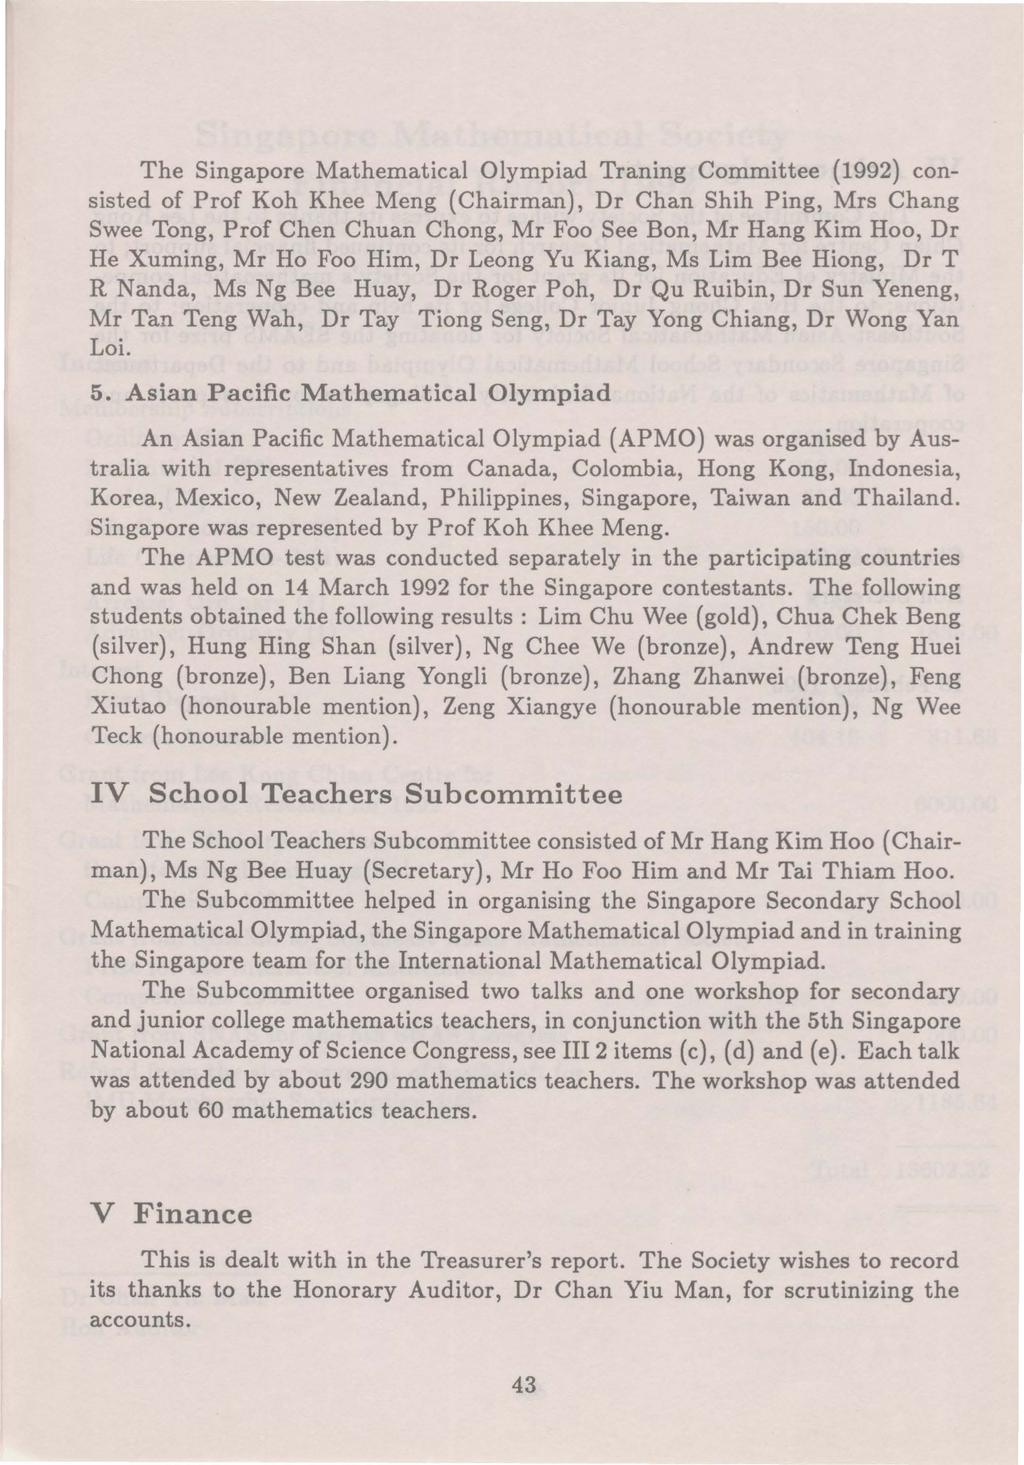 The Singapore Mathematical Olympiad Traning Committee (1992) consisted of Prof Koh Khee Meng (Chairman), Dr Chan Shih Ping, Mrs Chang Swee Tong, Prof Chen Chuan Chong, Mr Foo See Bon, Mr Hang Kim